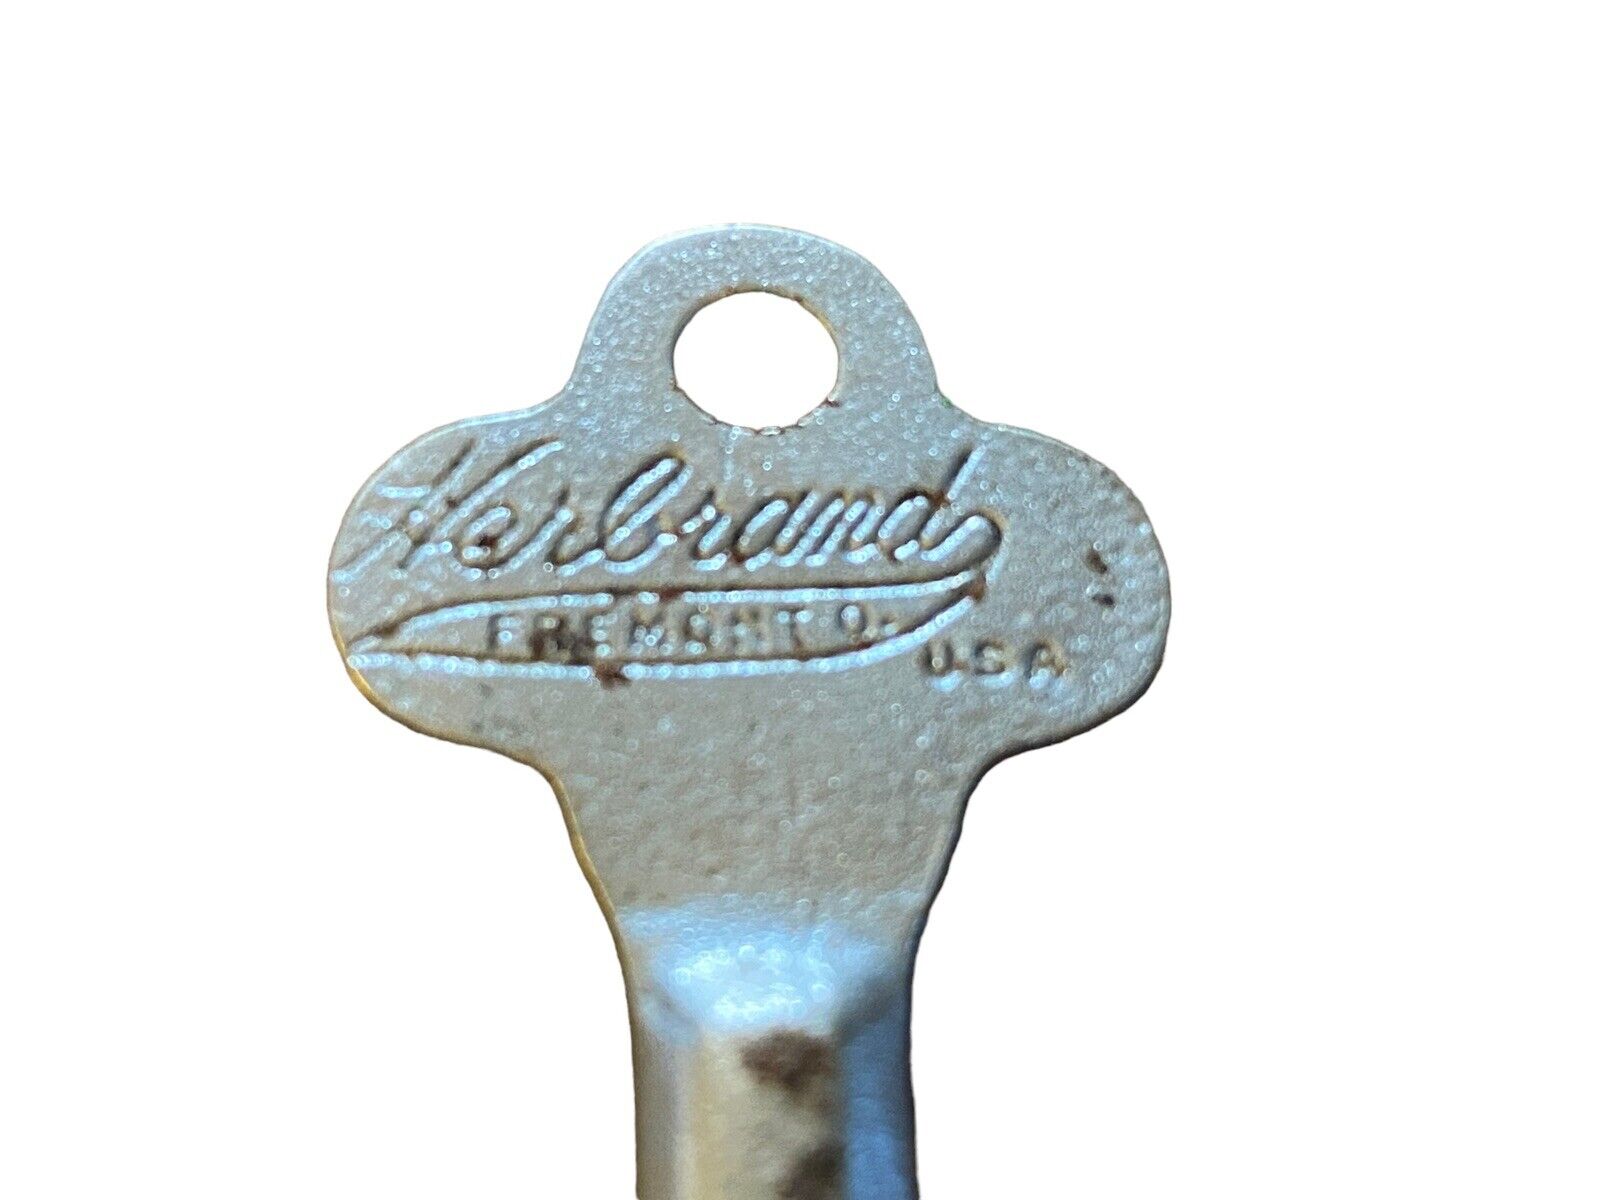 Vintage Herbrand Key Screwdriver Advertising Craven Foundry & Machine